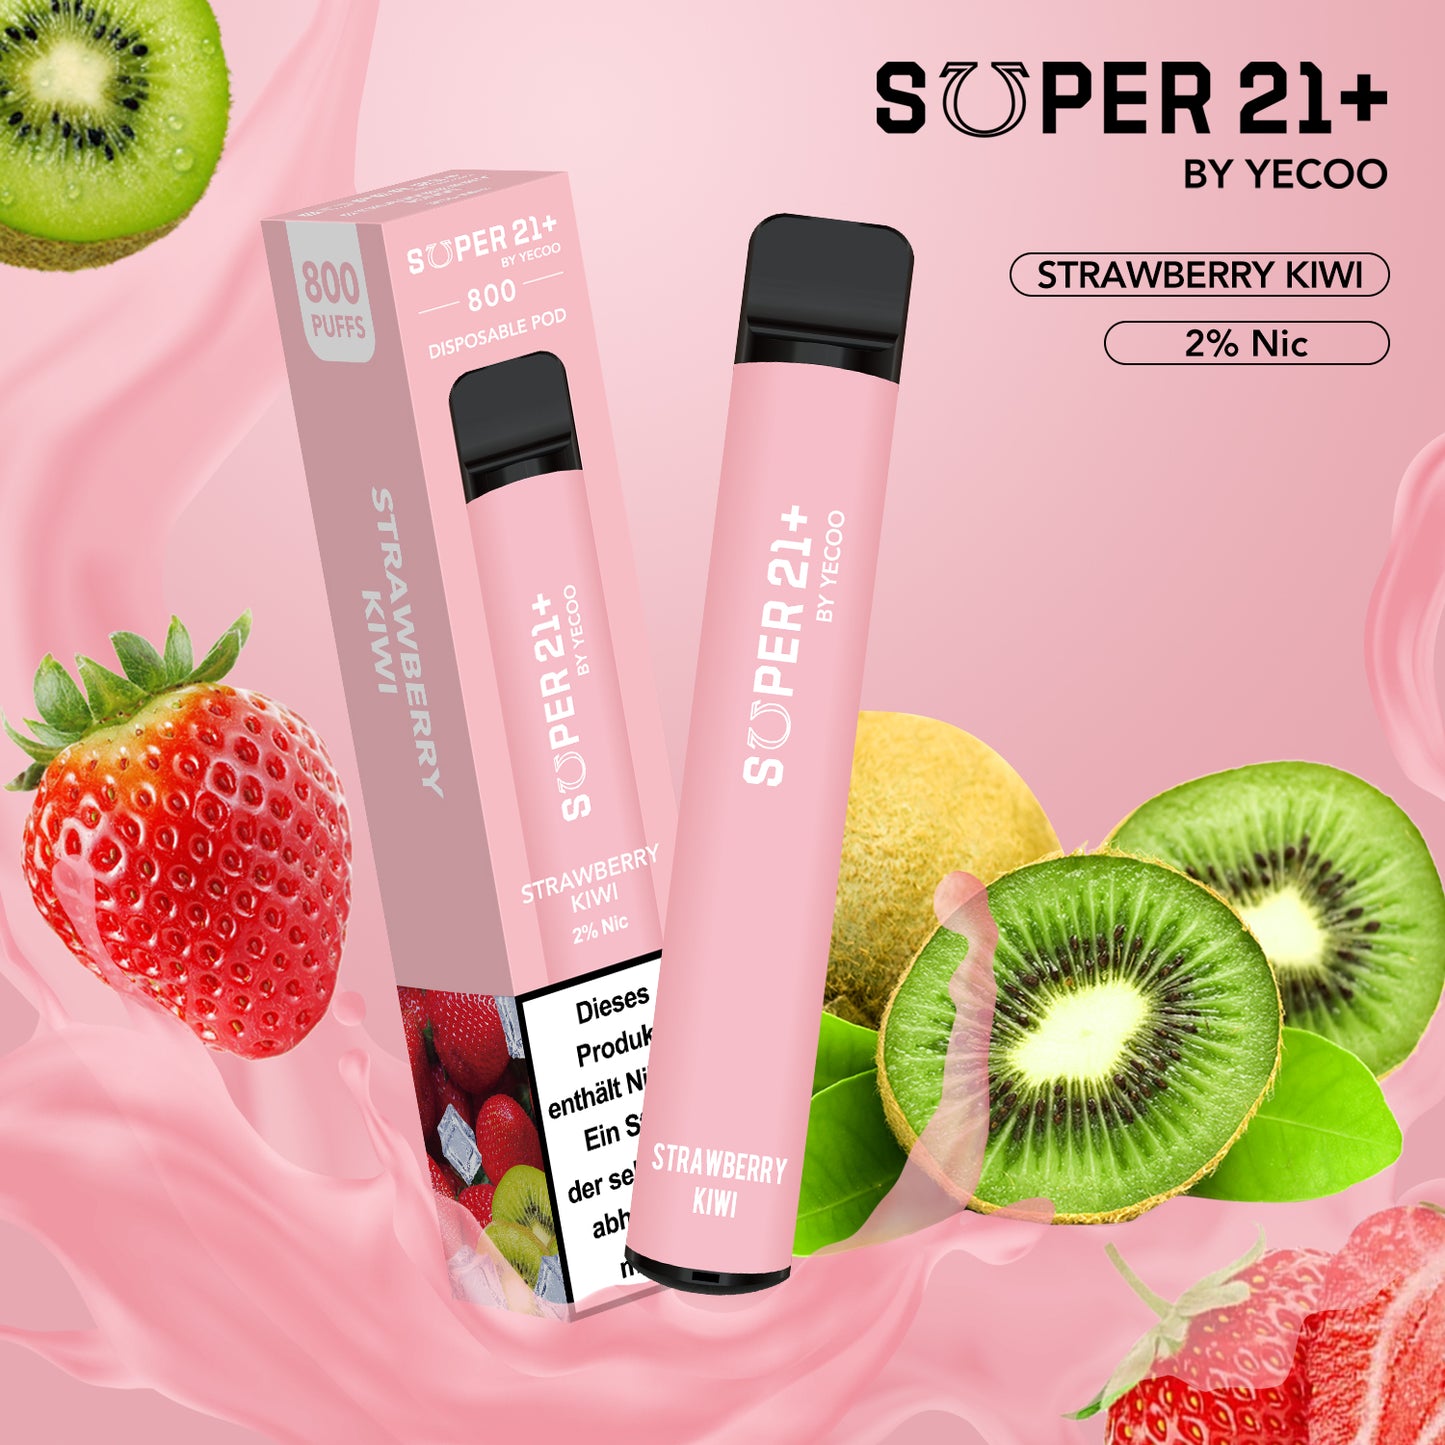 Strawberry Kiwi (2%) 800 – Super21+